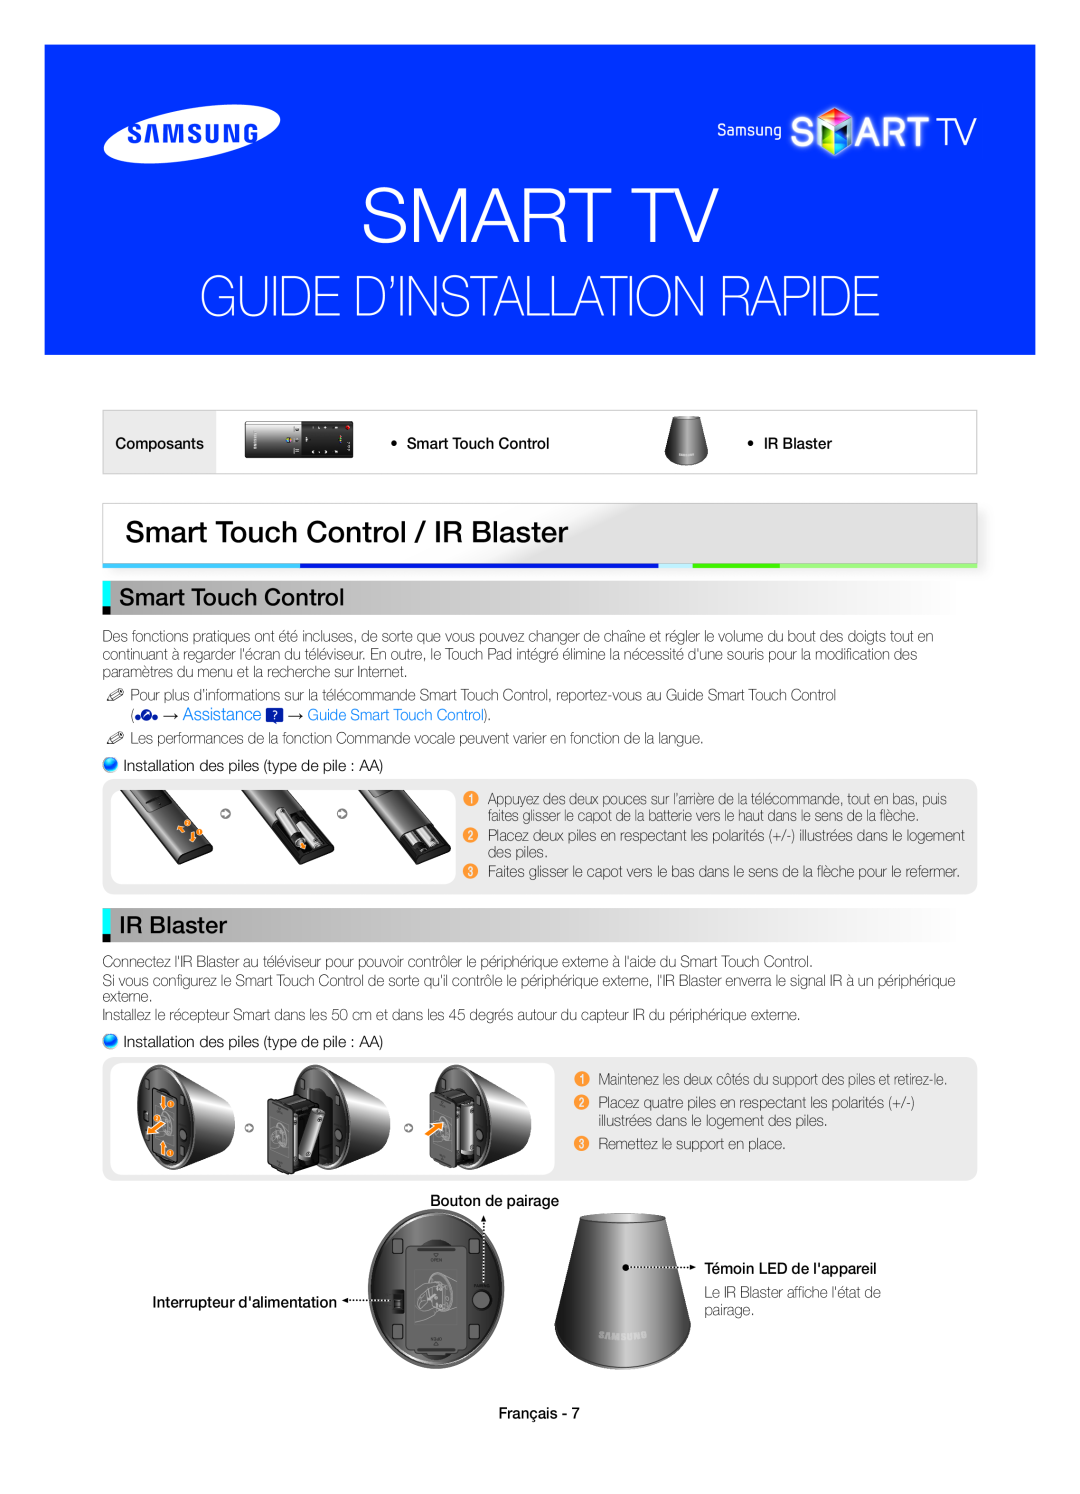 Samsung UE55ES8000SXXC Interrupteur dalimentation, Smart Tv, Guide D’Installation Rapide, Smart Touch Control / IR Blaster 